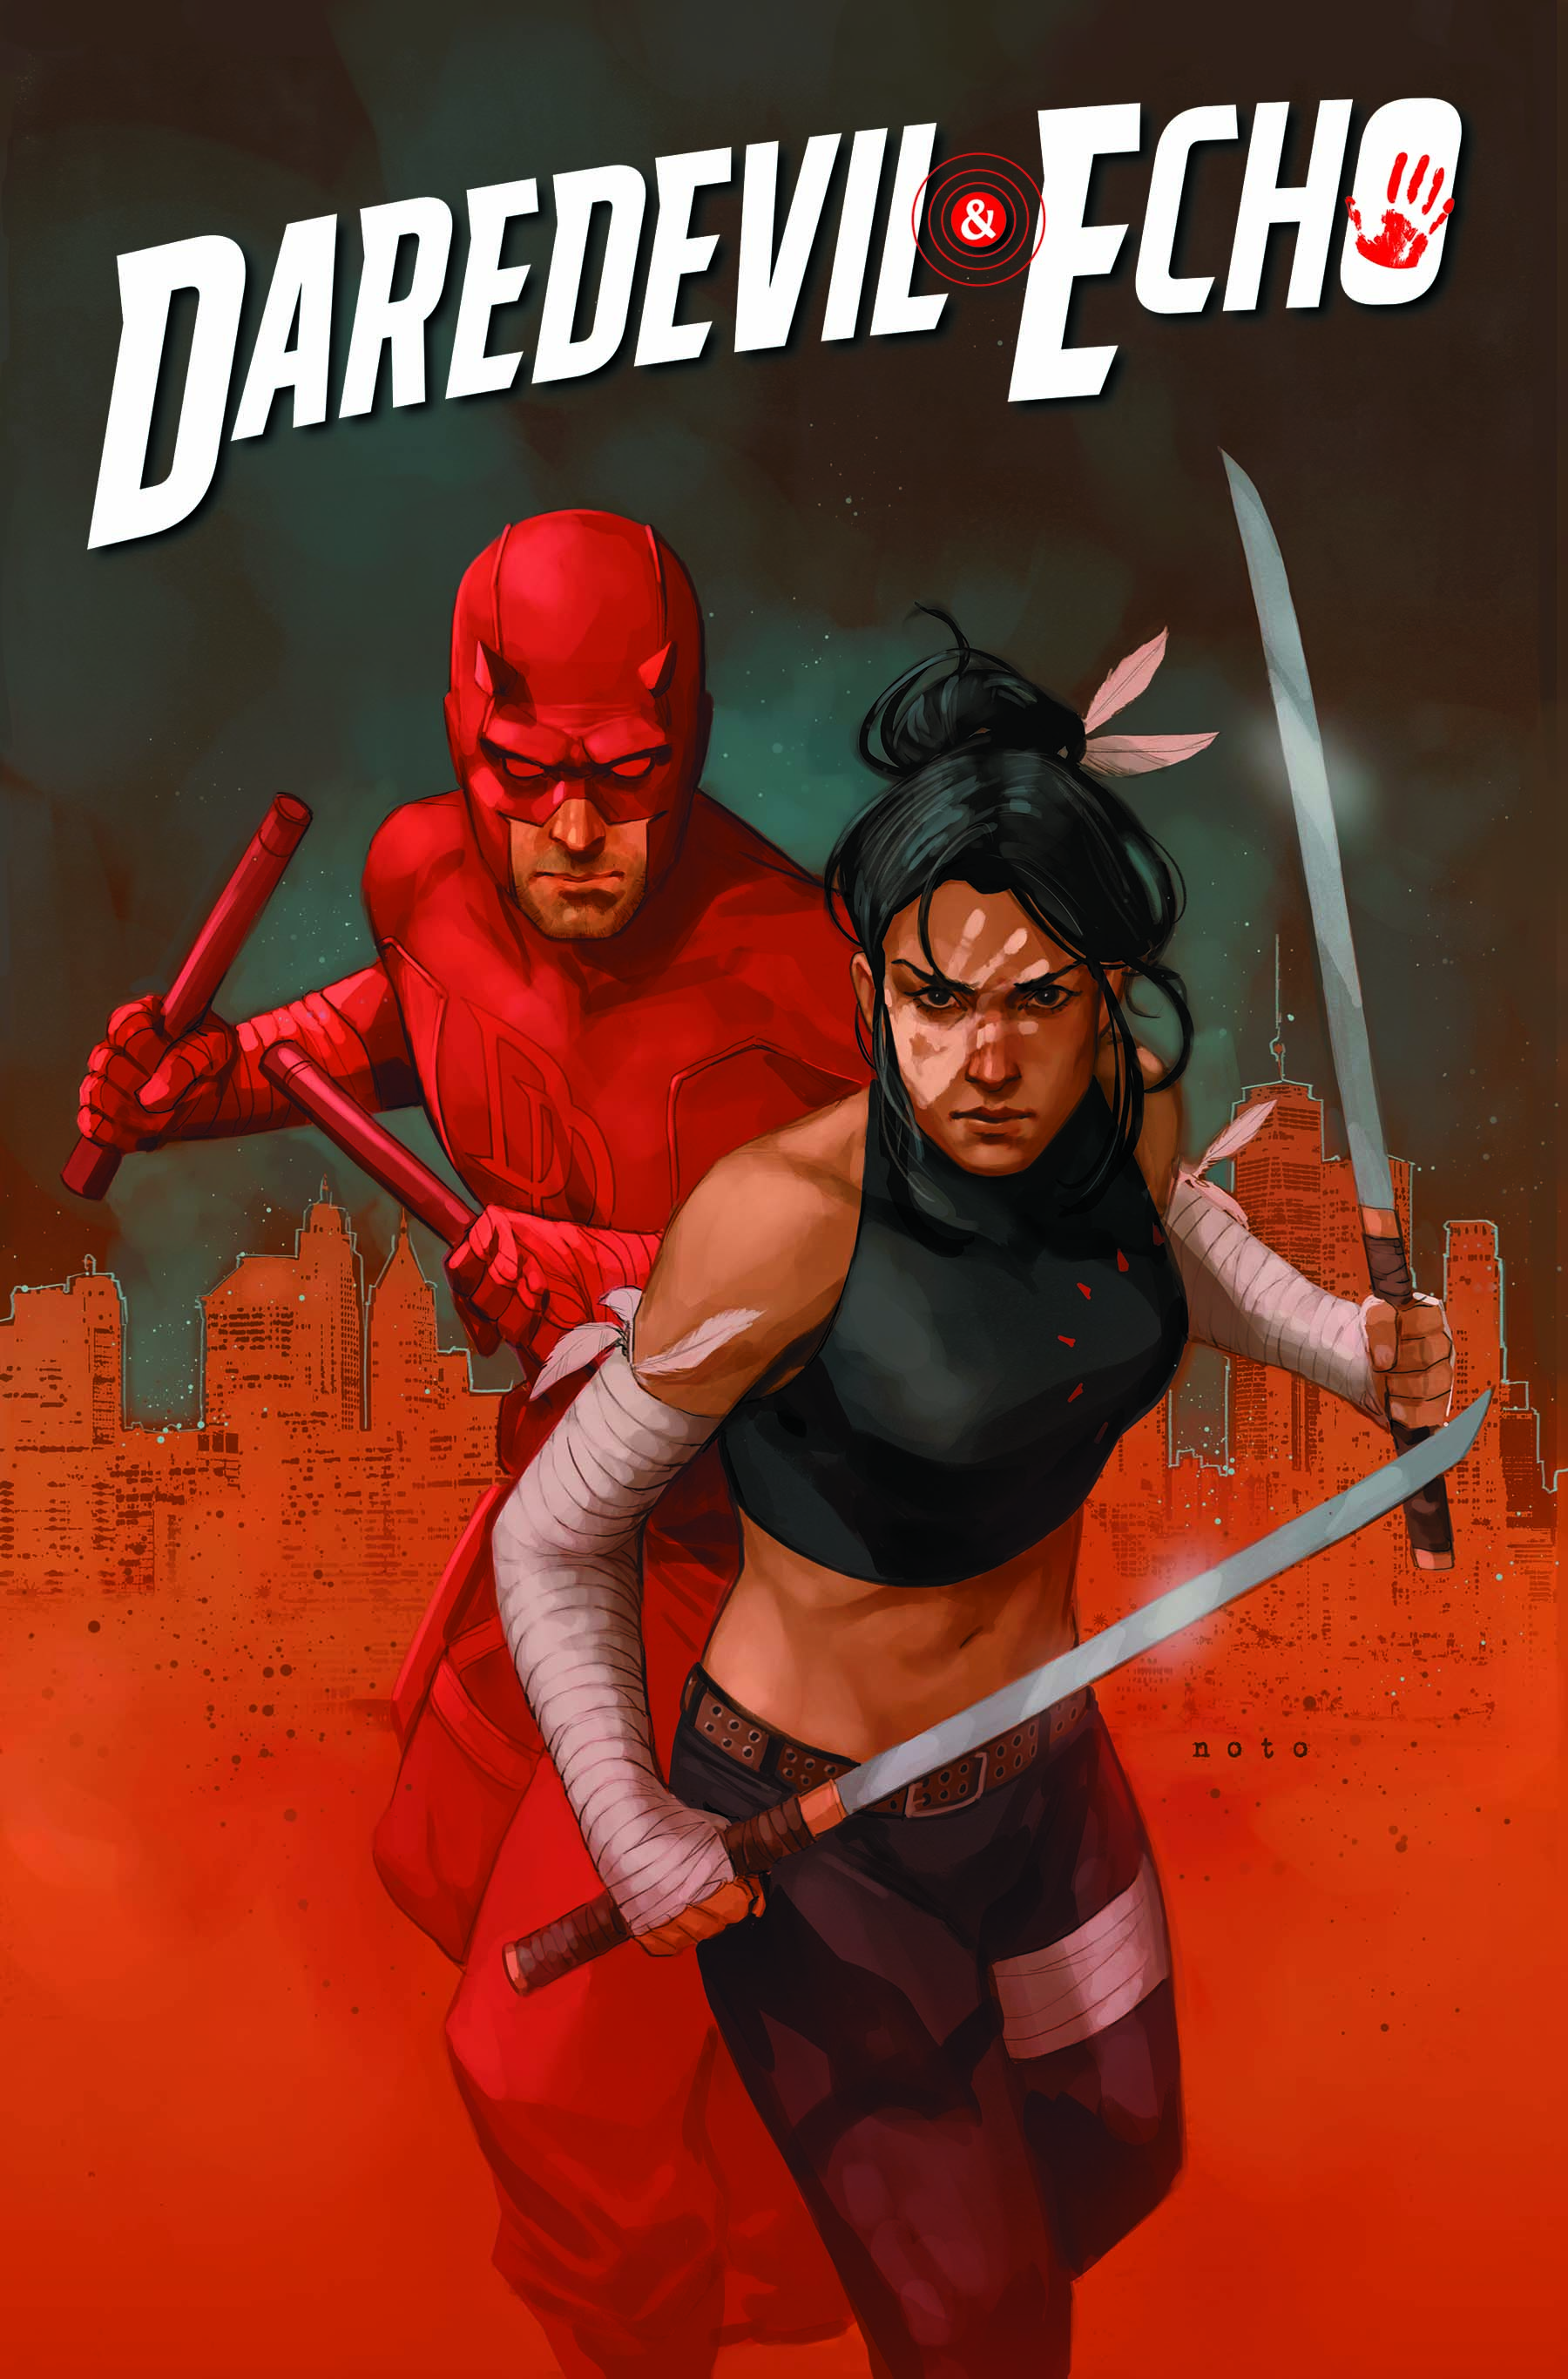 Daredevil & Echo (Trade Paperback)